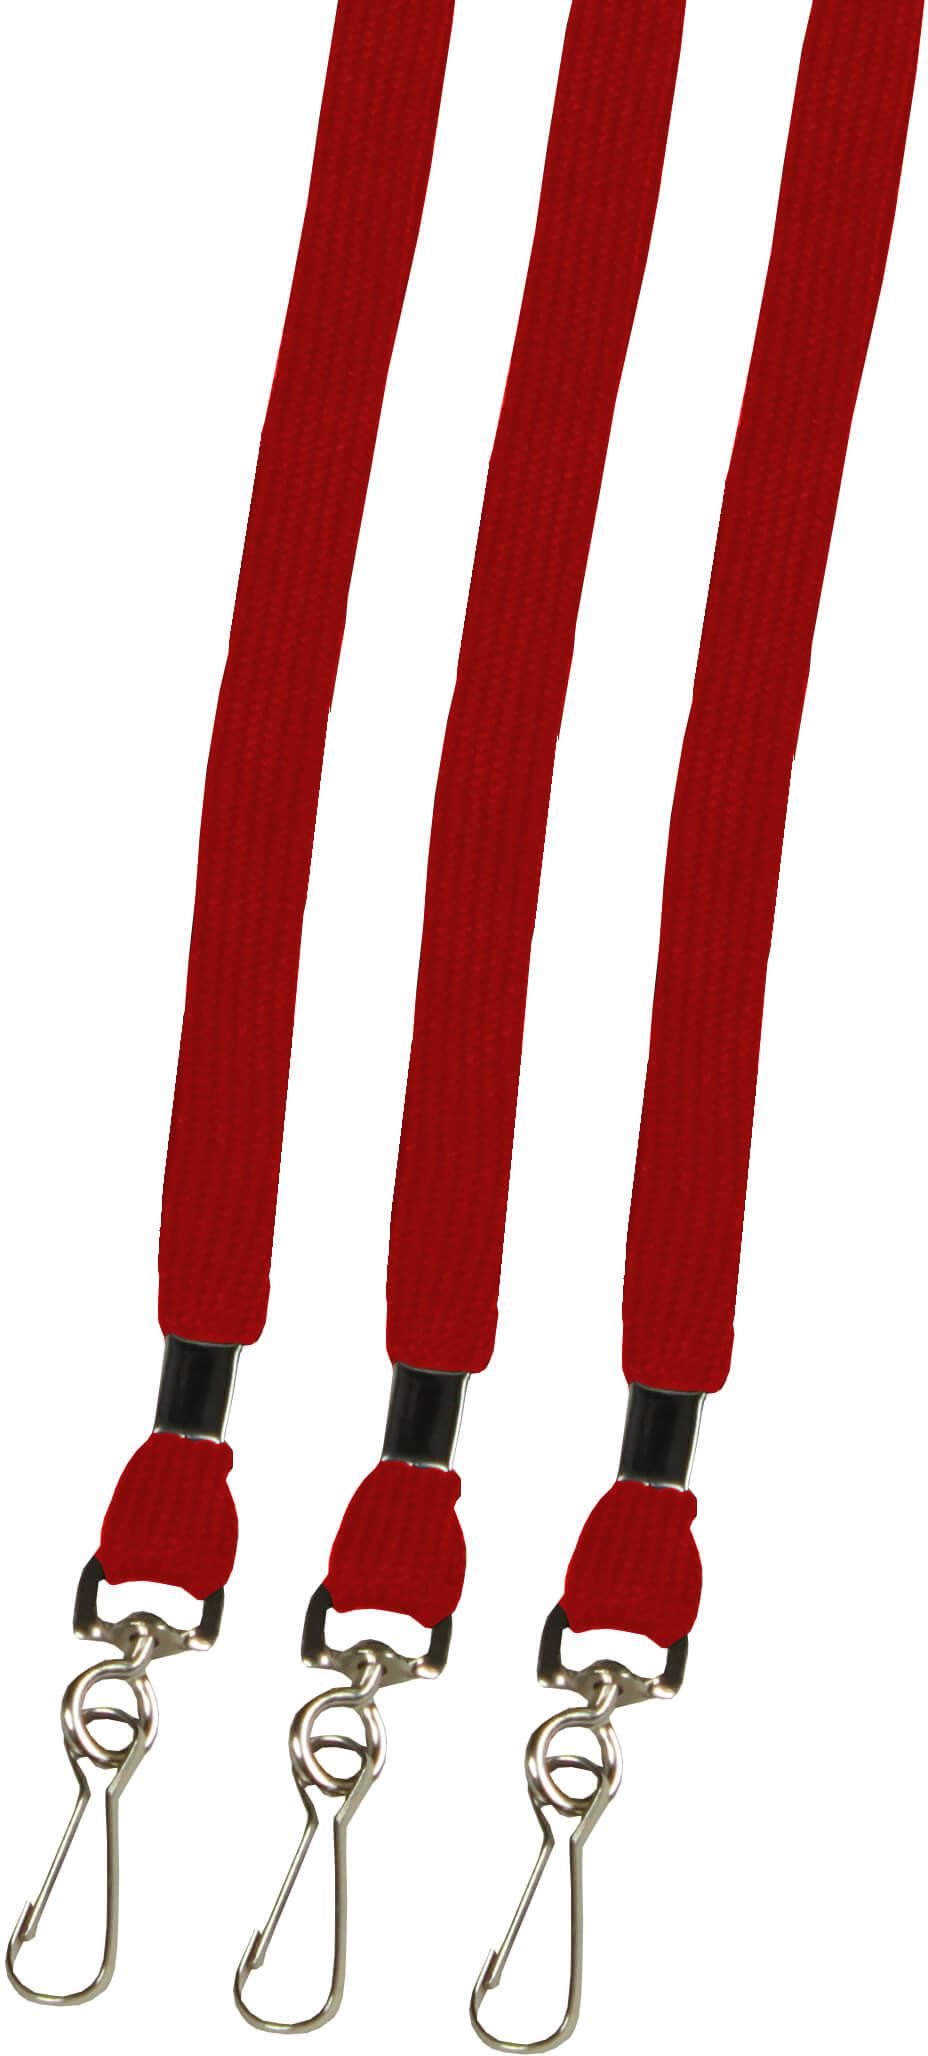 Umhängebänder mit Haken in rot sofort lieferbar! | Bestnr. UMBAMS-100-RO